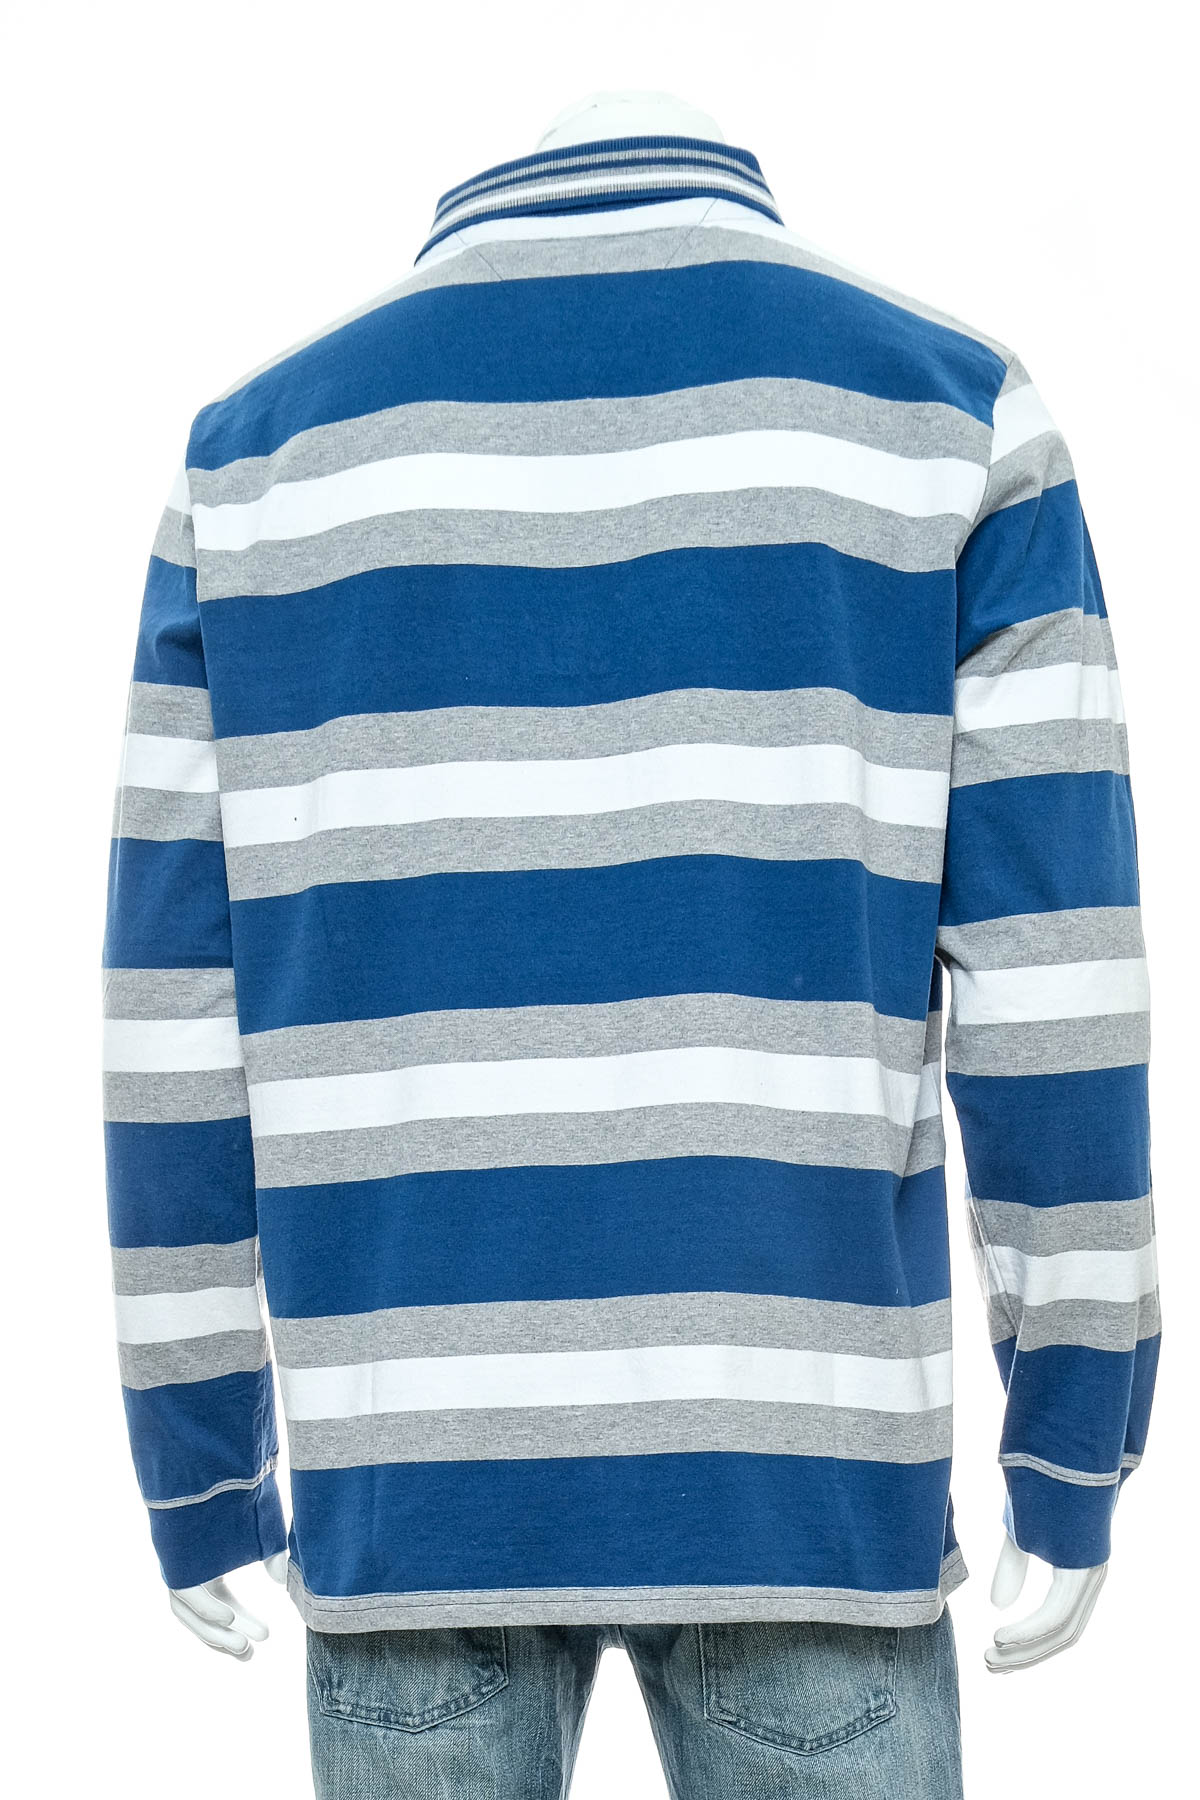 Men's sweater - Biaggini - 1